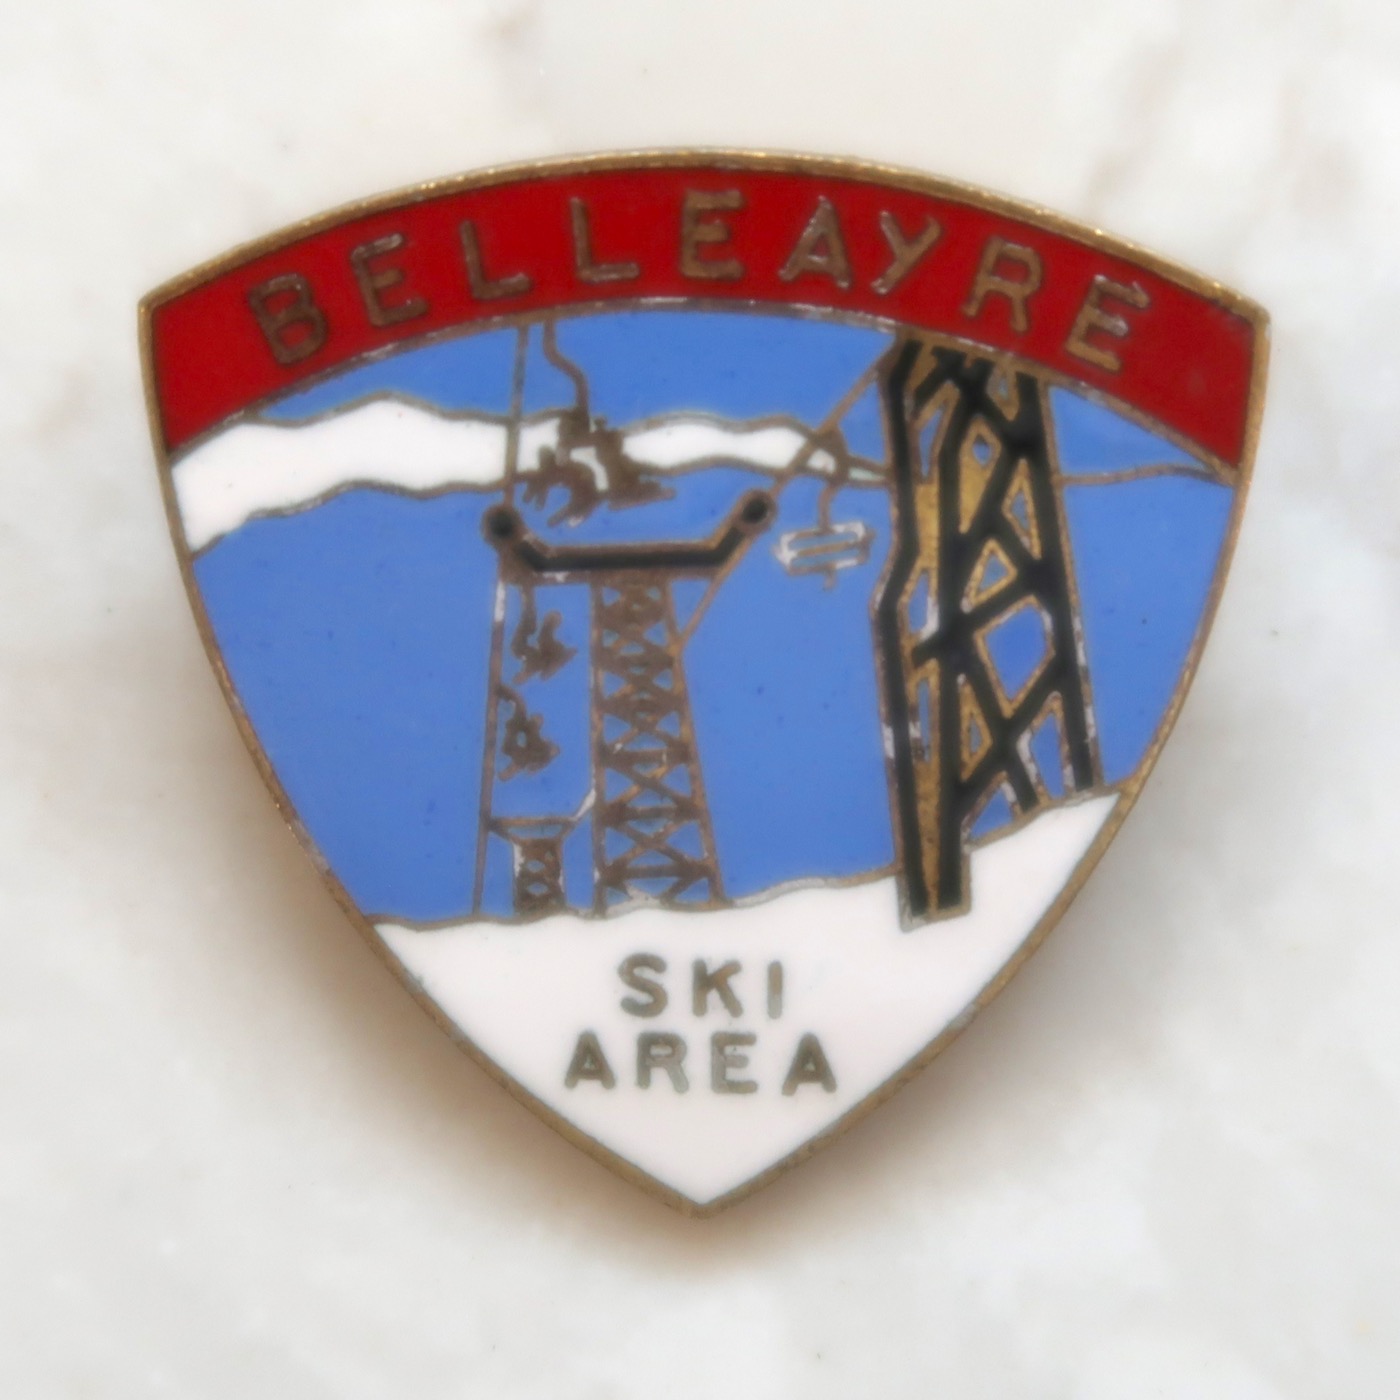 Belleayre ski pin